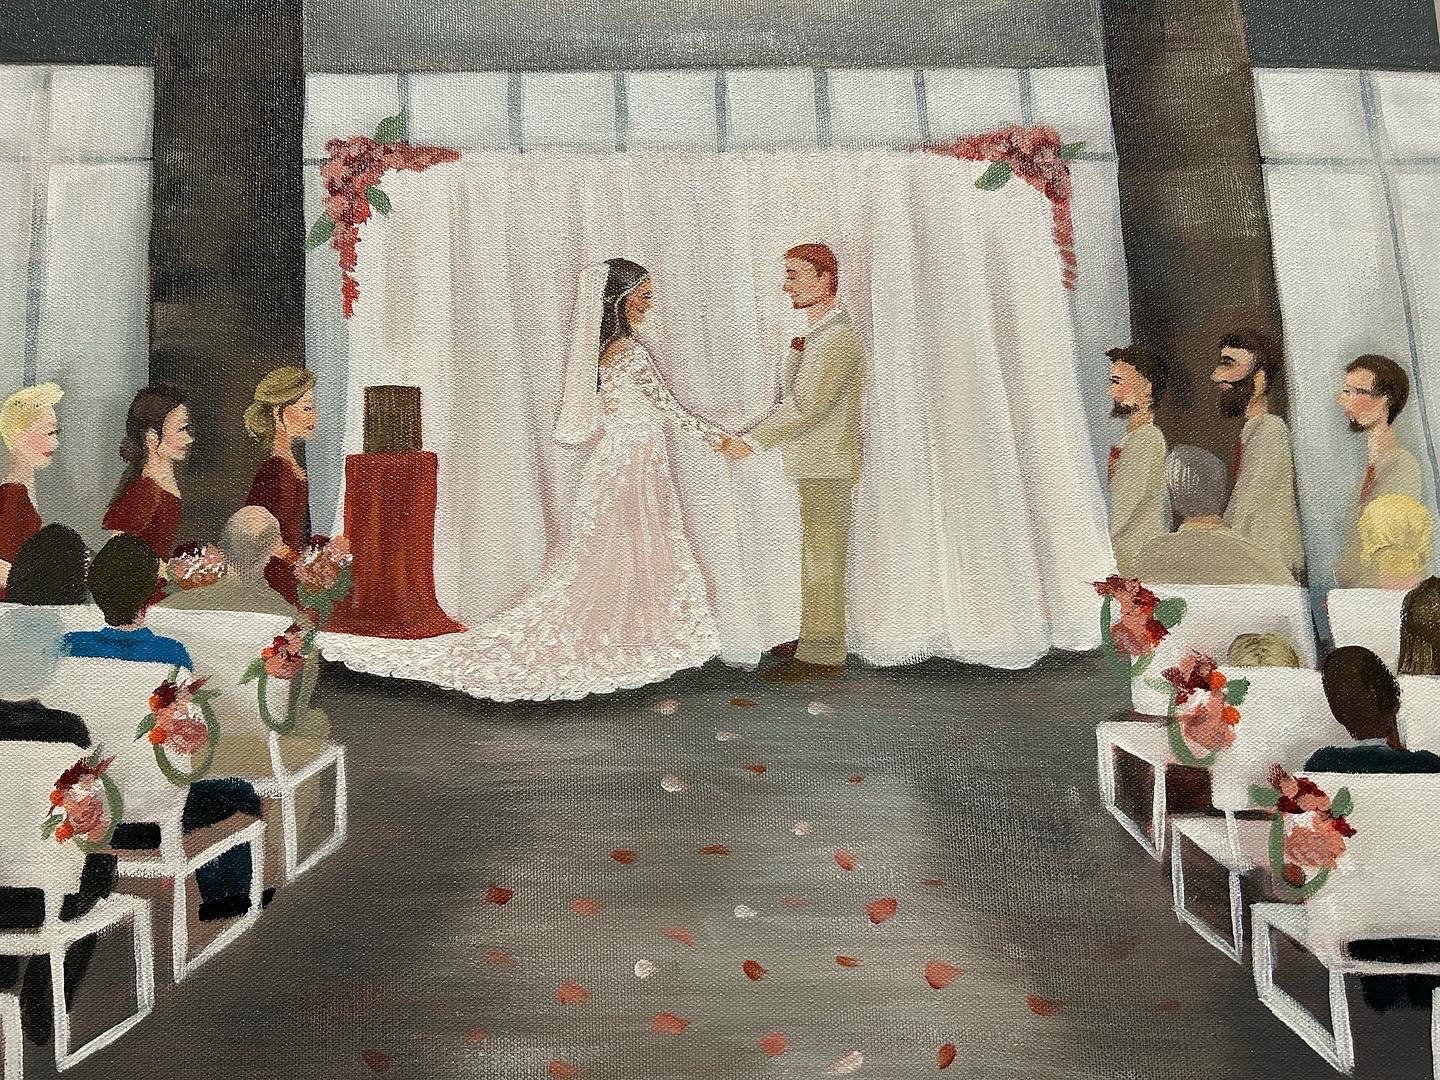 Live Wedding Painting